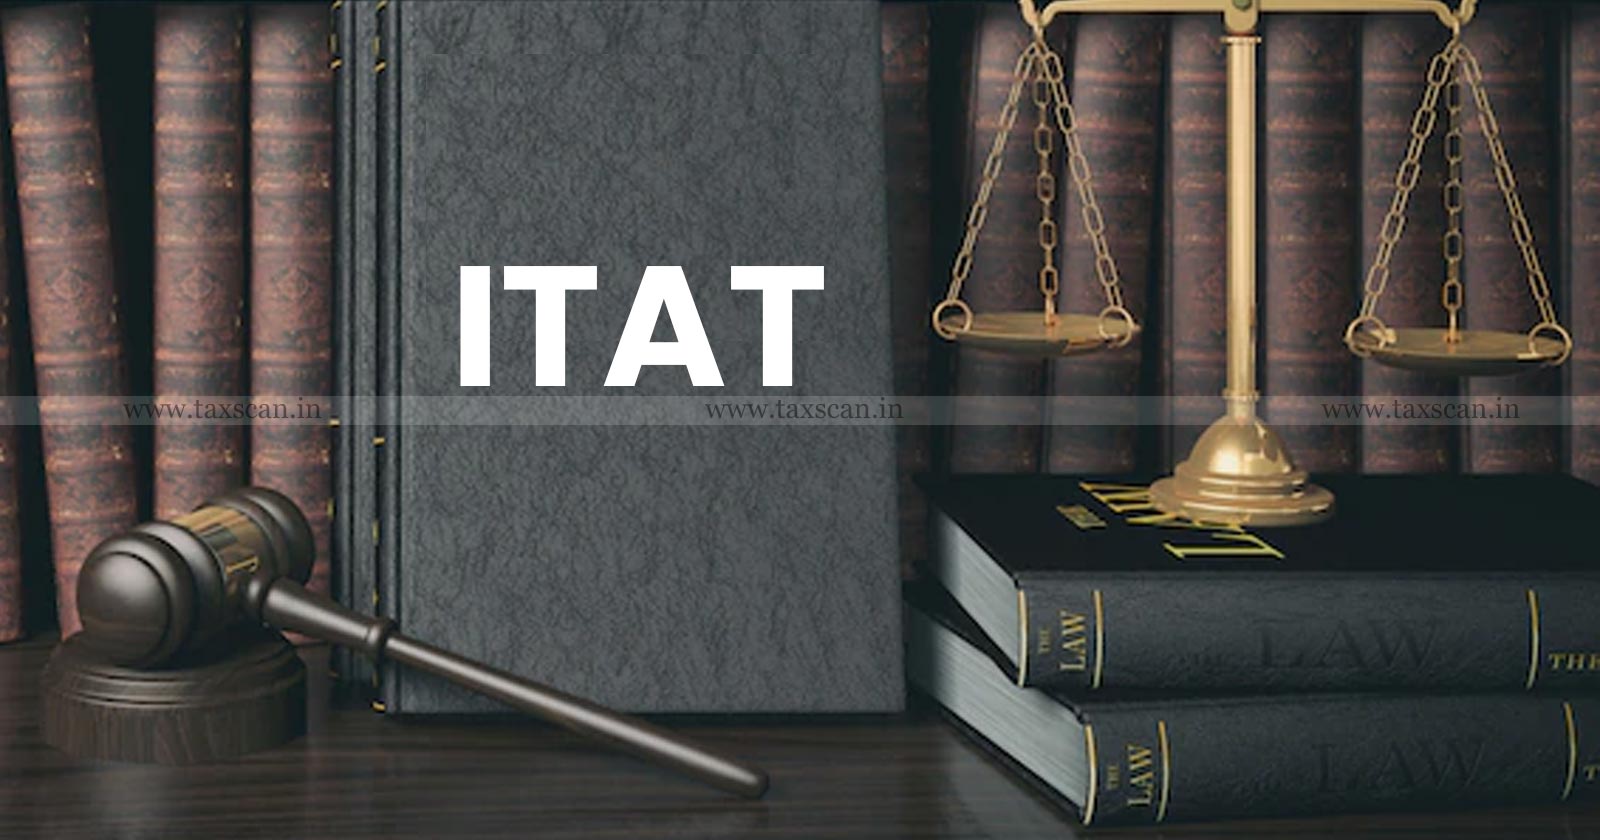 incriminating material - ITAT - taxscan